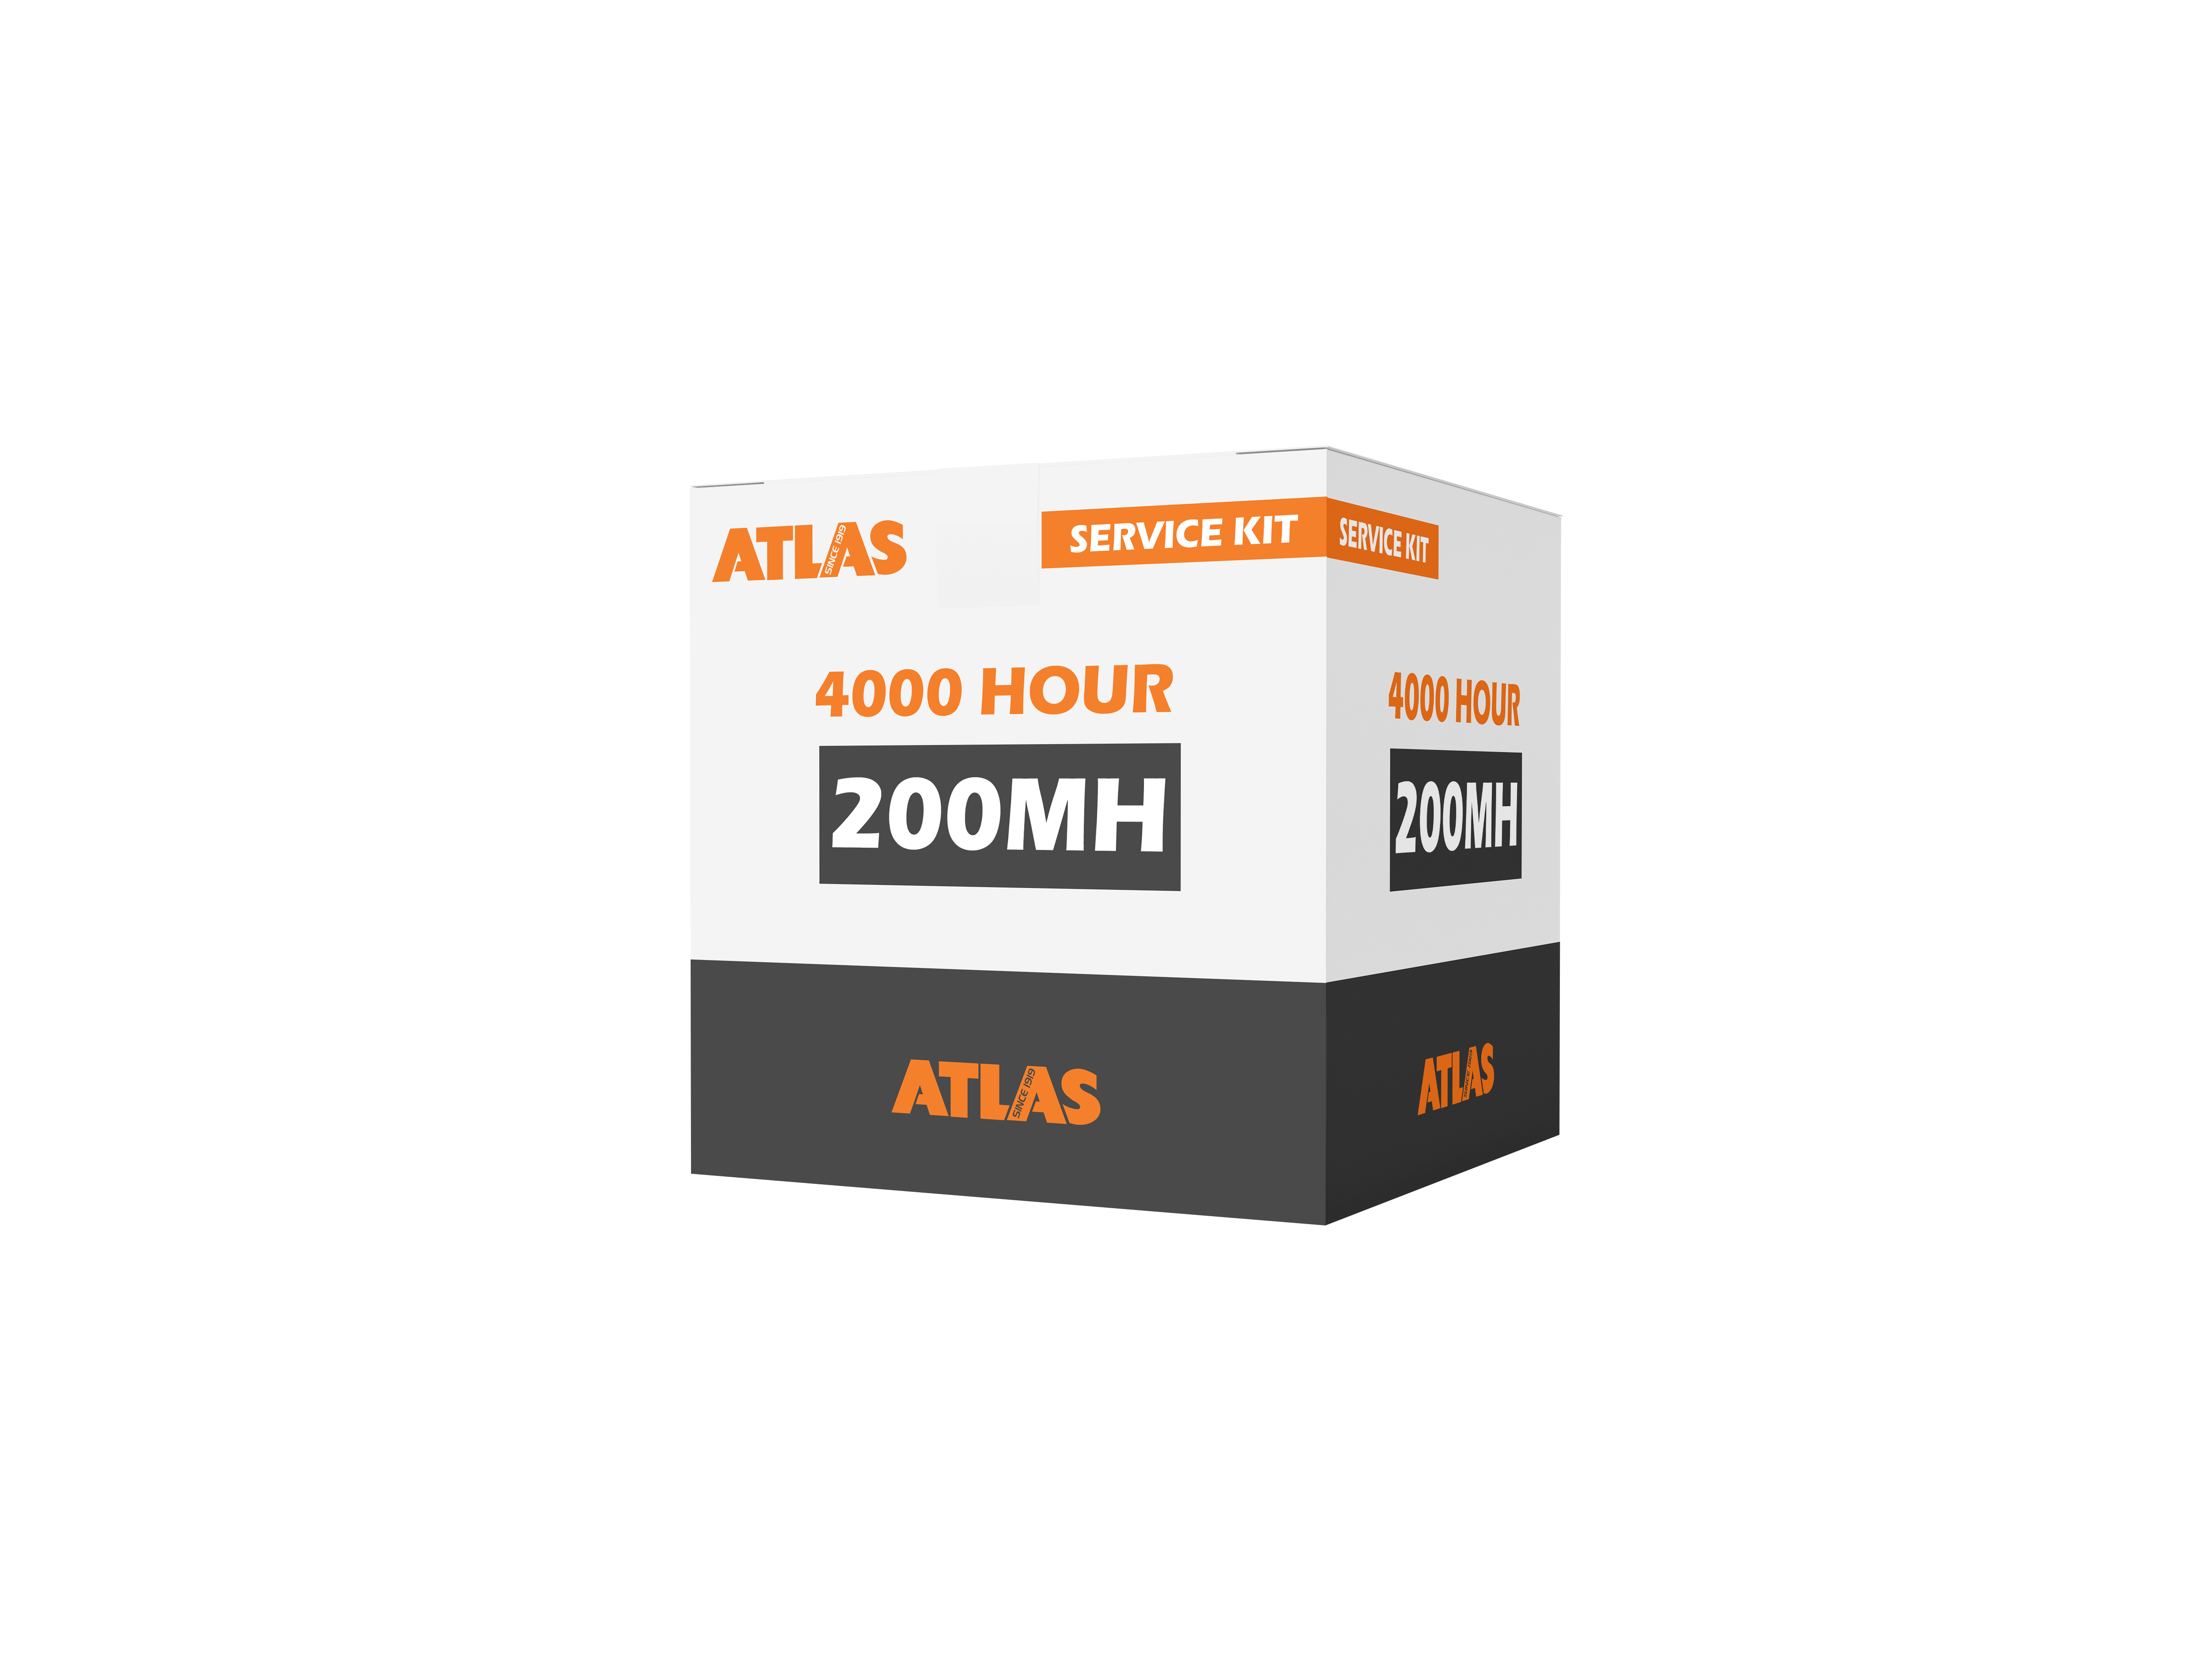 Atlas 200MH 4000 Hour Service Kit